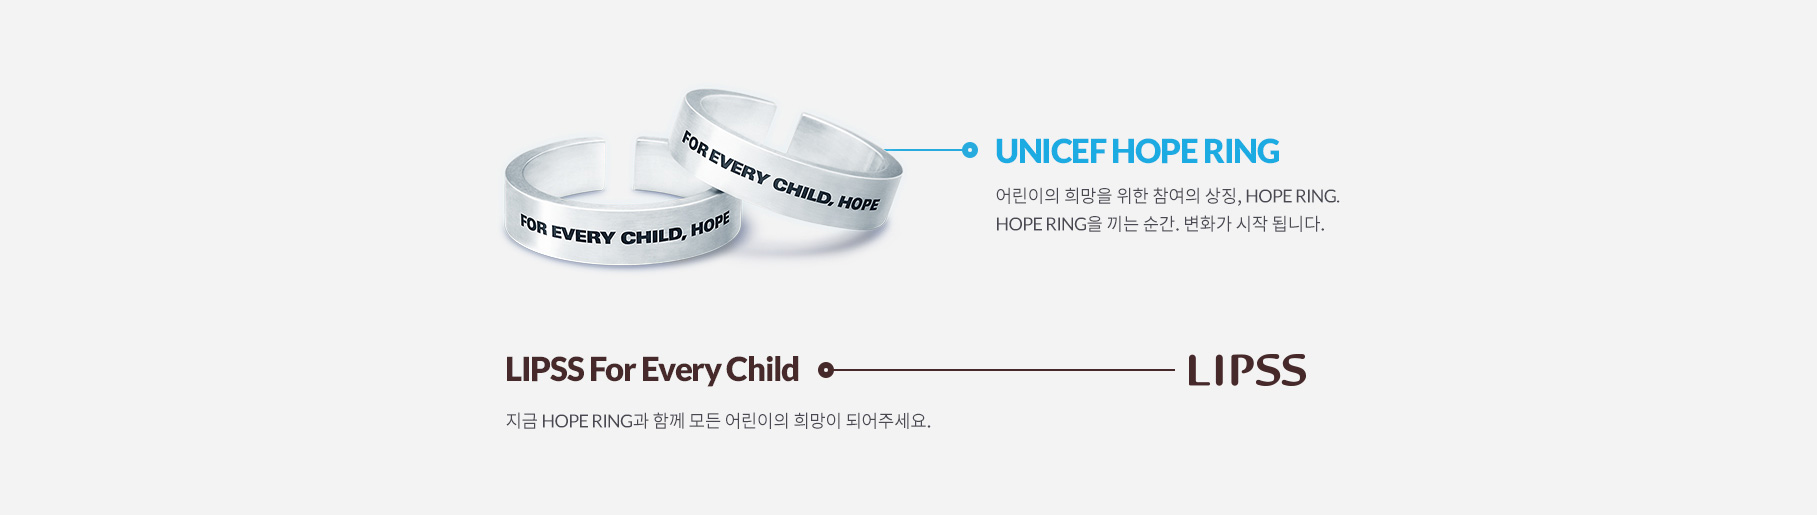 UNICEF HOPE RING, 어린이의 희망을 위한 참여의 상징, HOPE RING. HOPE RING을 끼는 순간. 변화가 시작됩니다. LIPSS For Evenry Child - LIPSS, 지금 HOPE RING과 함꼐 모든 어린이의 희망이 되어주세요.